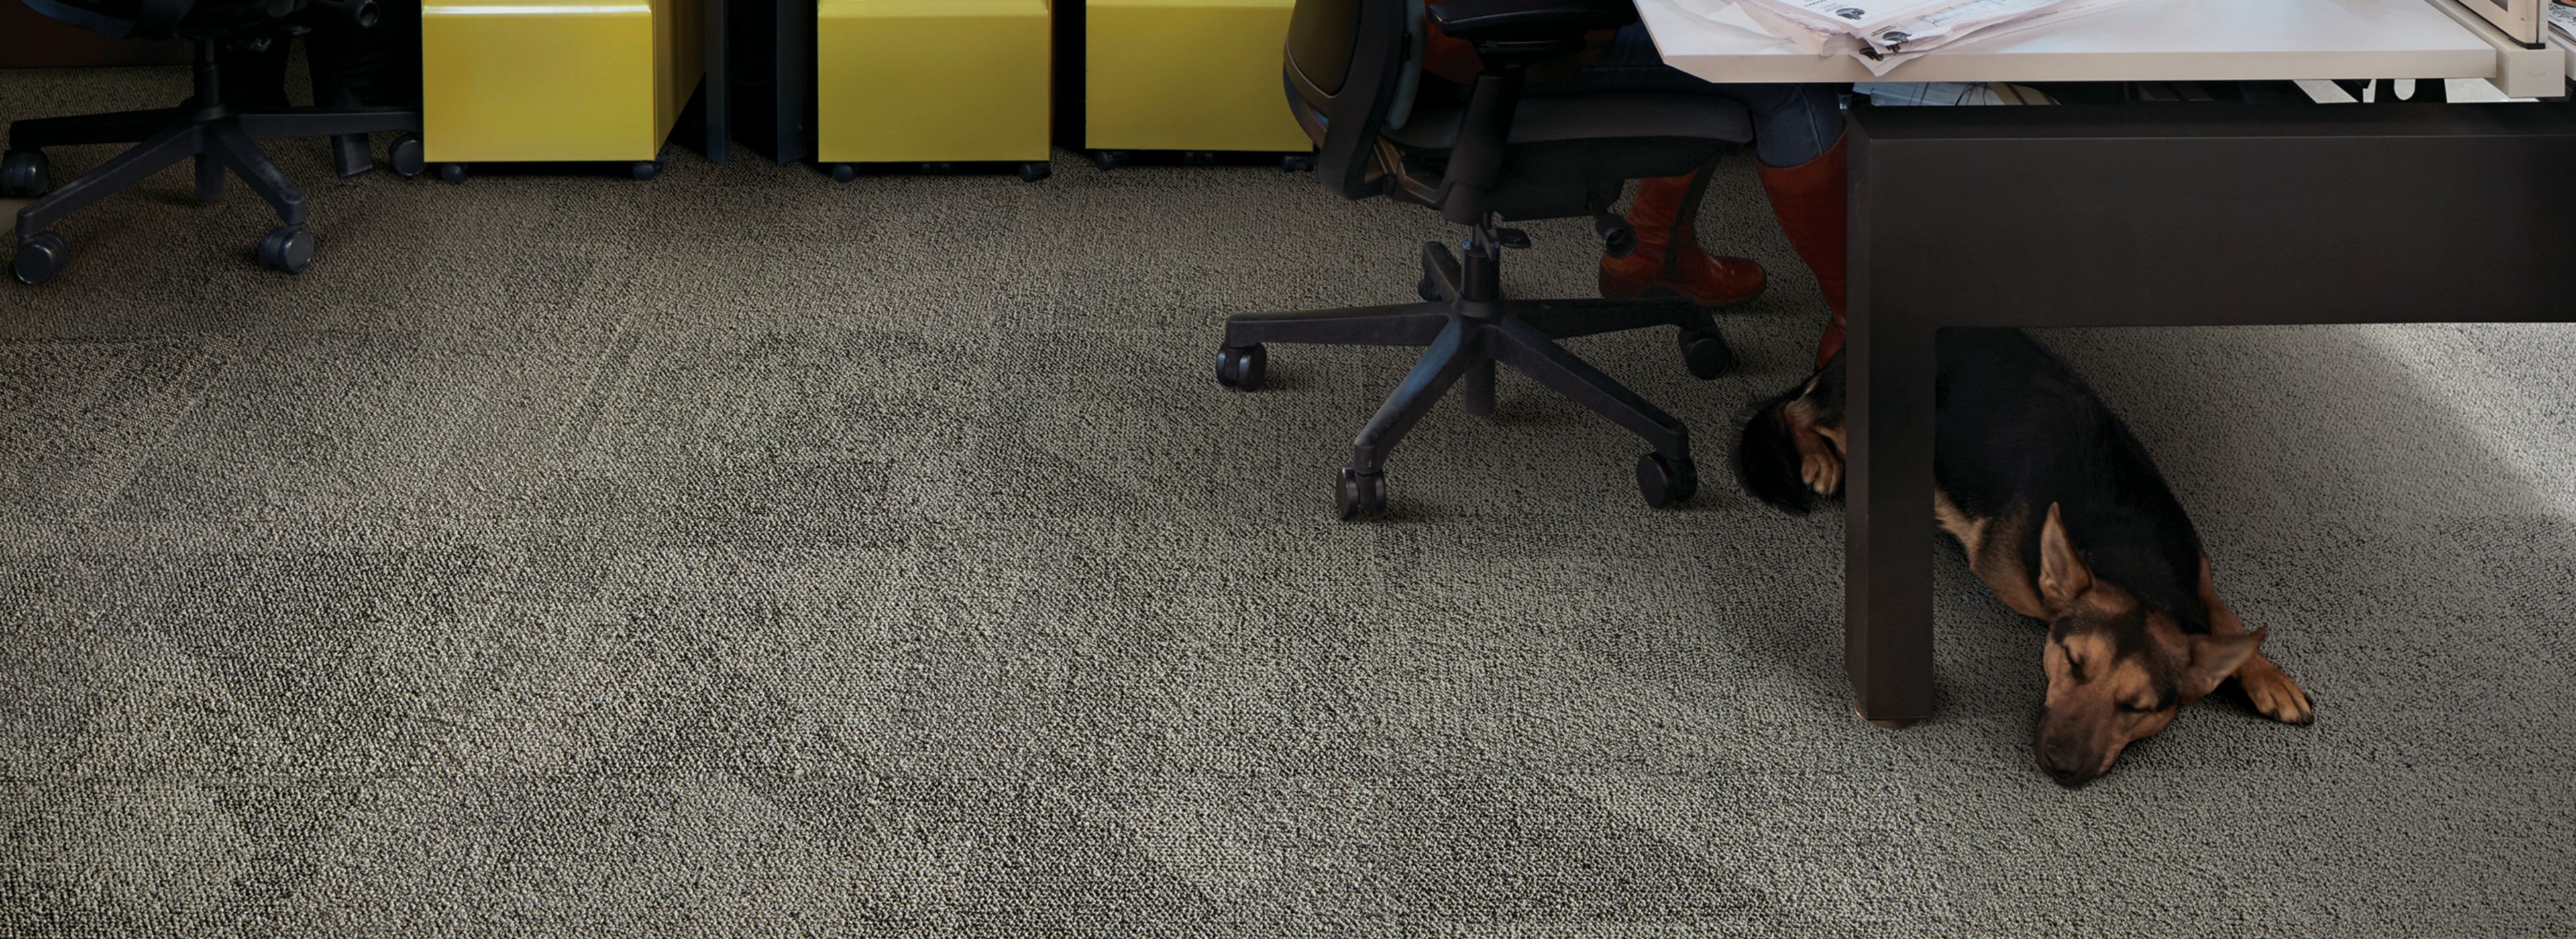 Interface Paver carpet tile and HN850 plank carpet tile in open office area with multiple people working at desk número de imagen 1